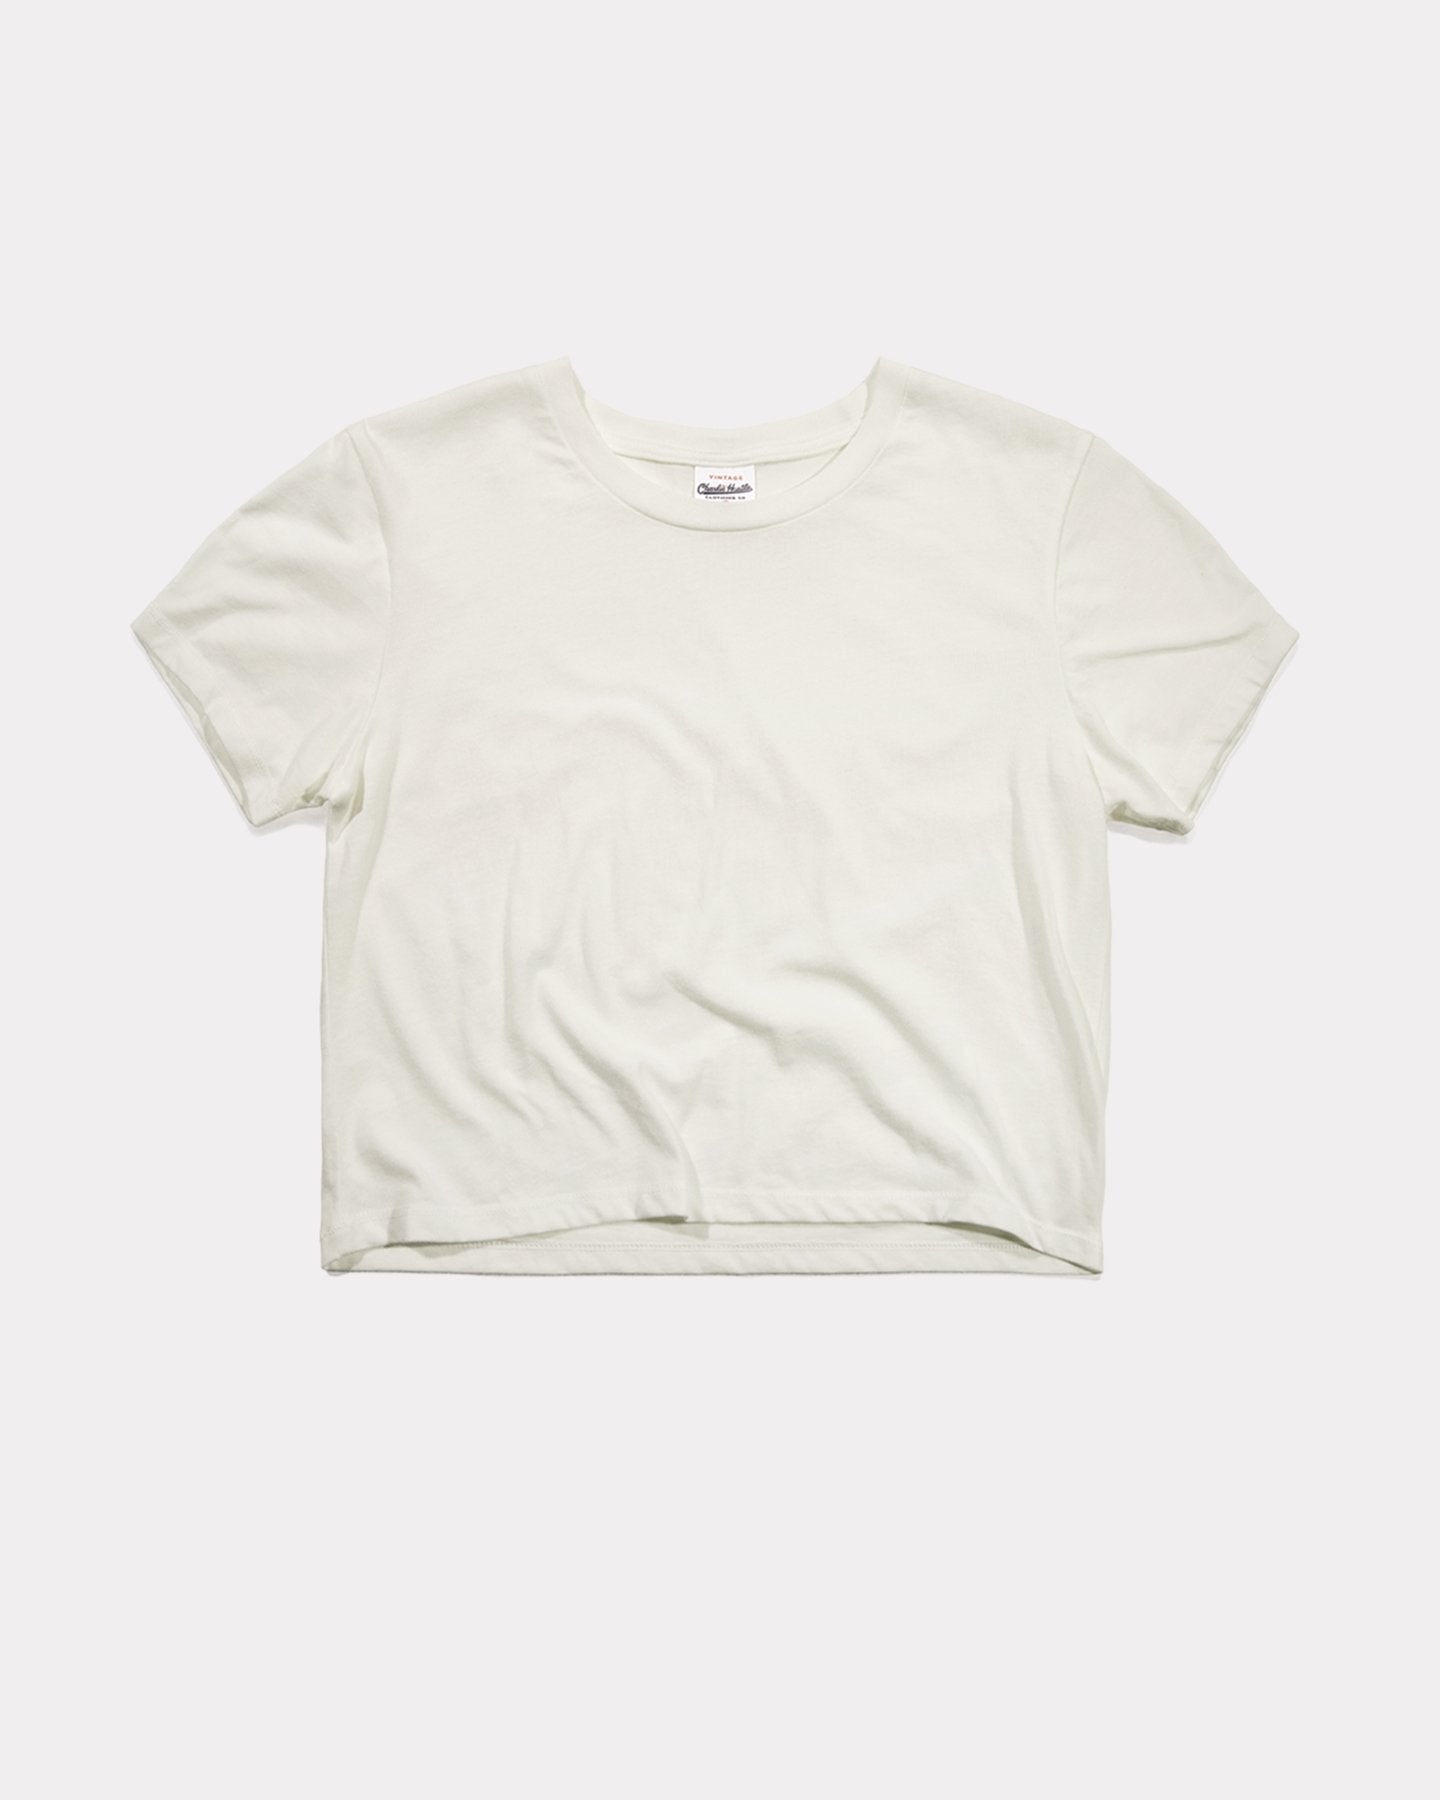 Women's Essential White Vintage Crop Top T-Shirt | CHARLIE HUSTLE